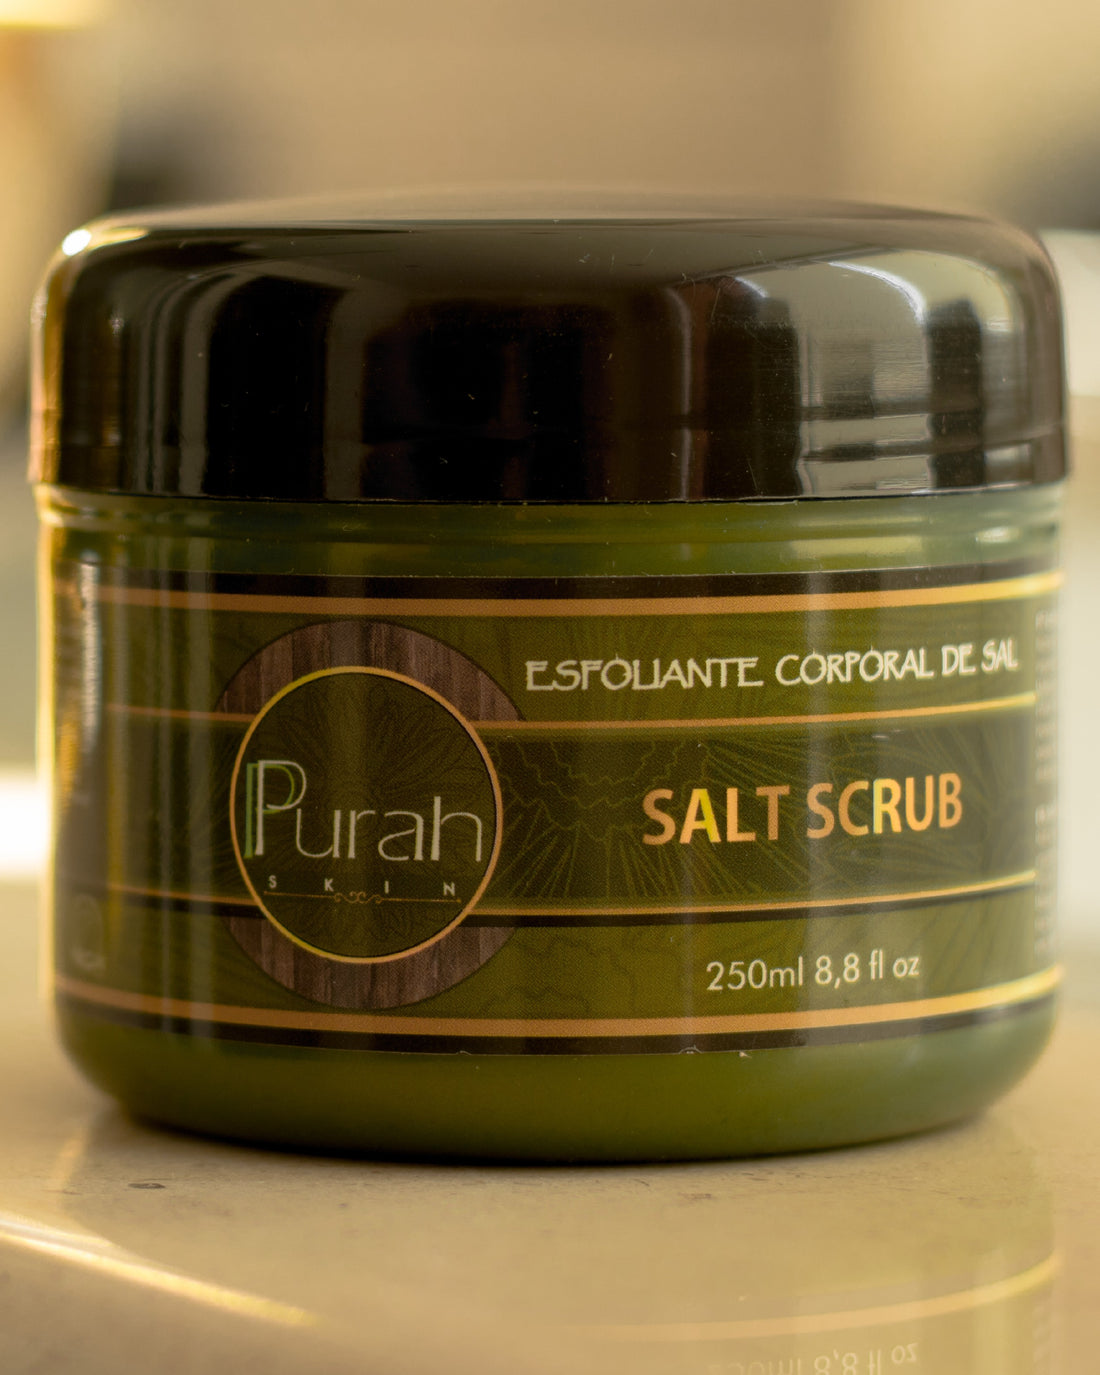 Salt Scrub - Loja Purah beauty